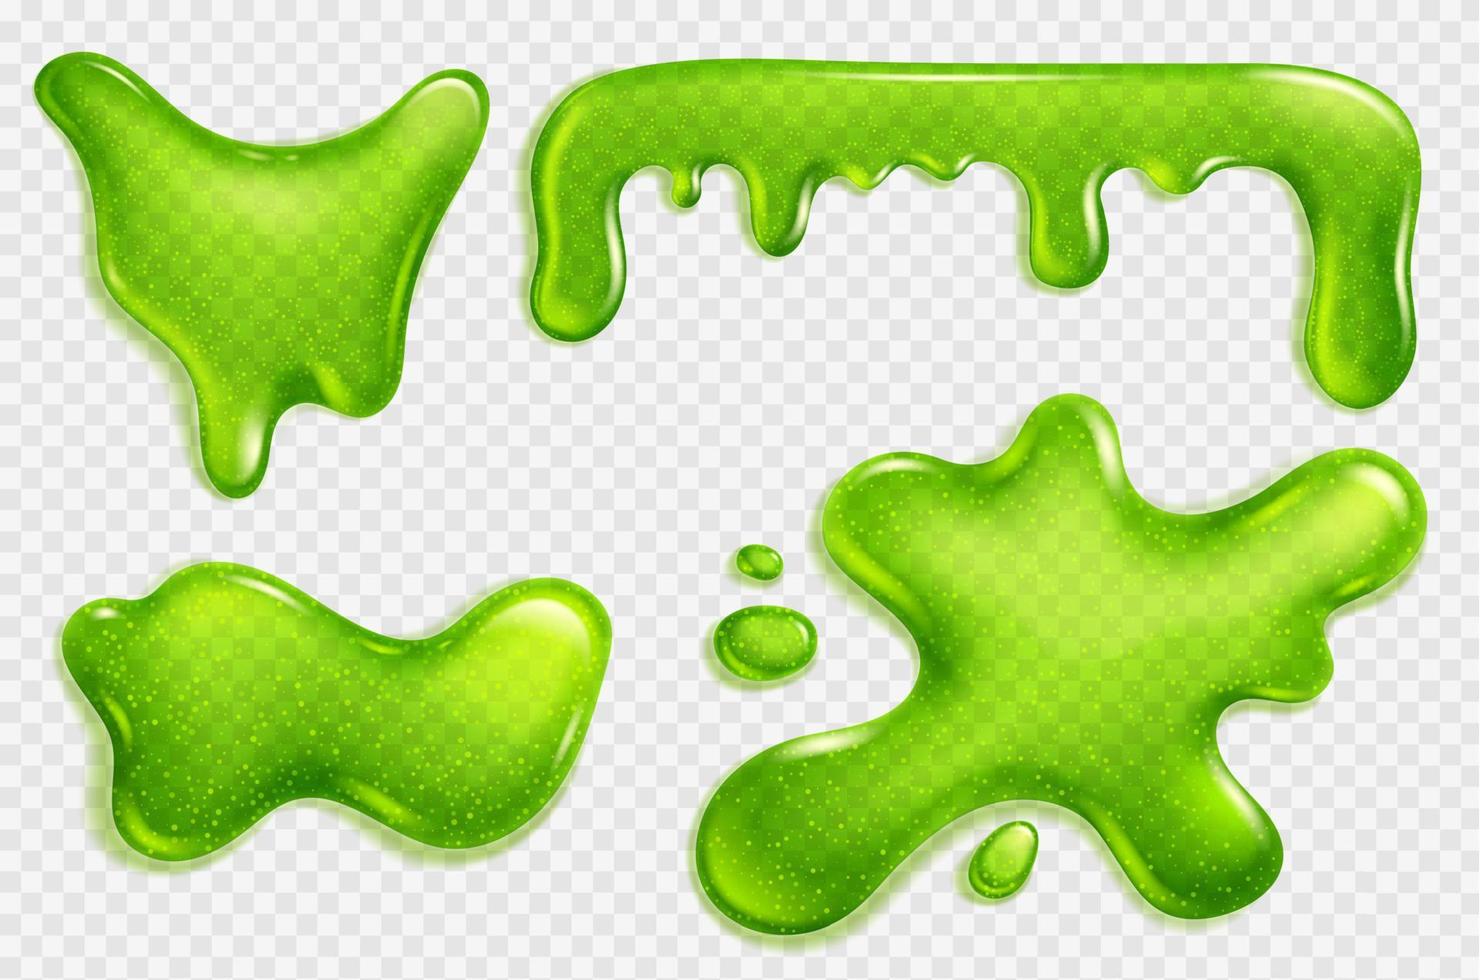 verde melma, gelatina, liquido gocciolante moccolo o colla vettore